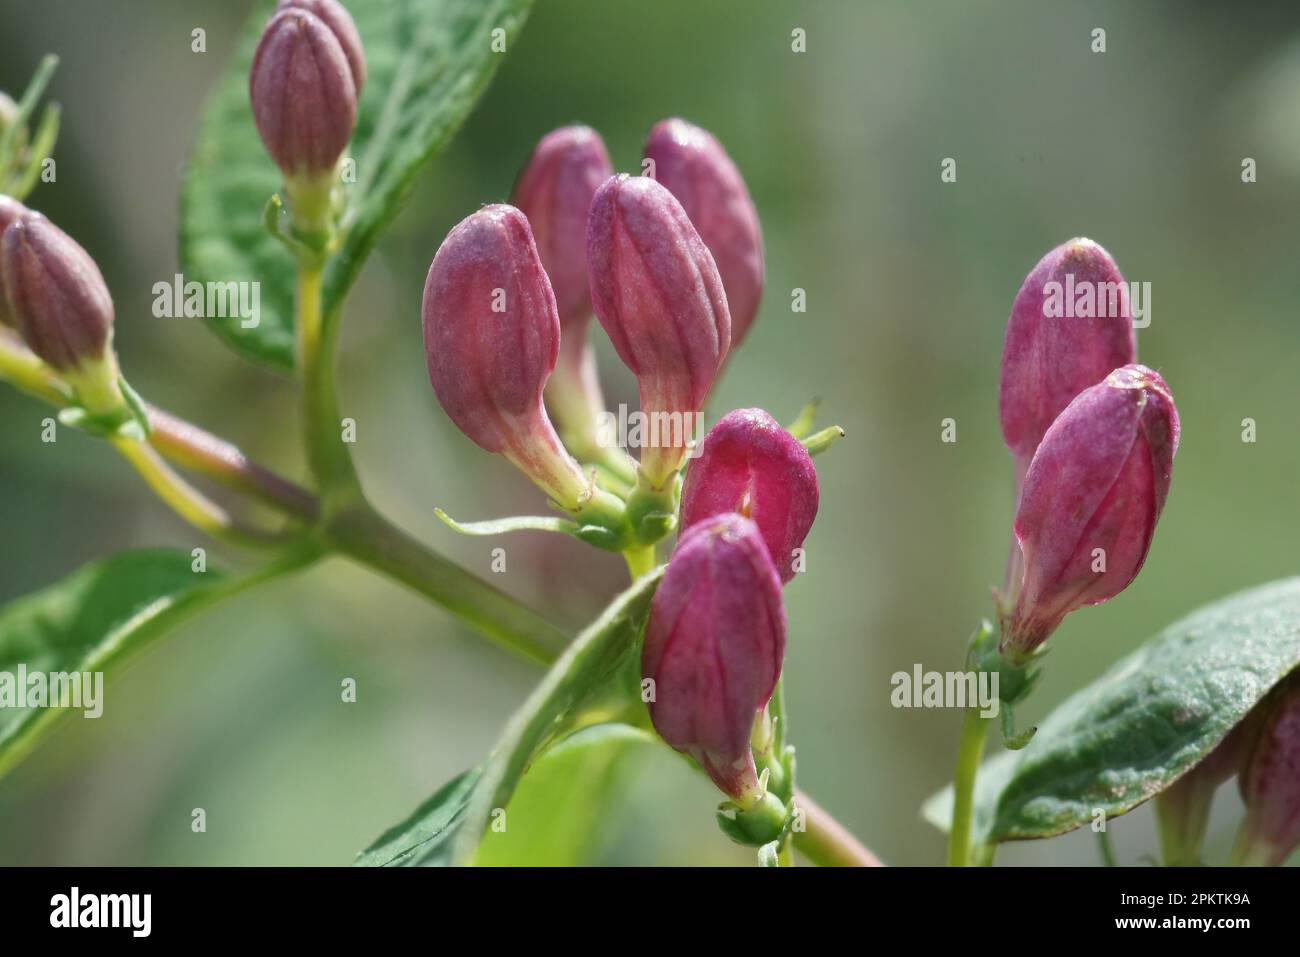 Natural closeup on the emerging red flowers of the Tatarian honeysuckle shrub, Lonicera tatarica Stock Photo